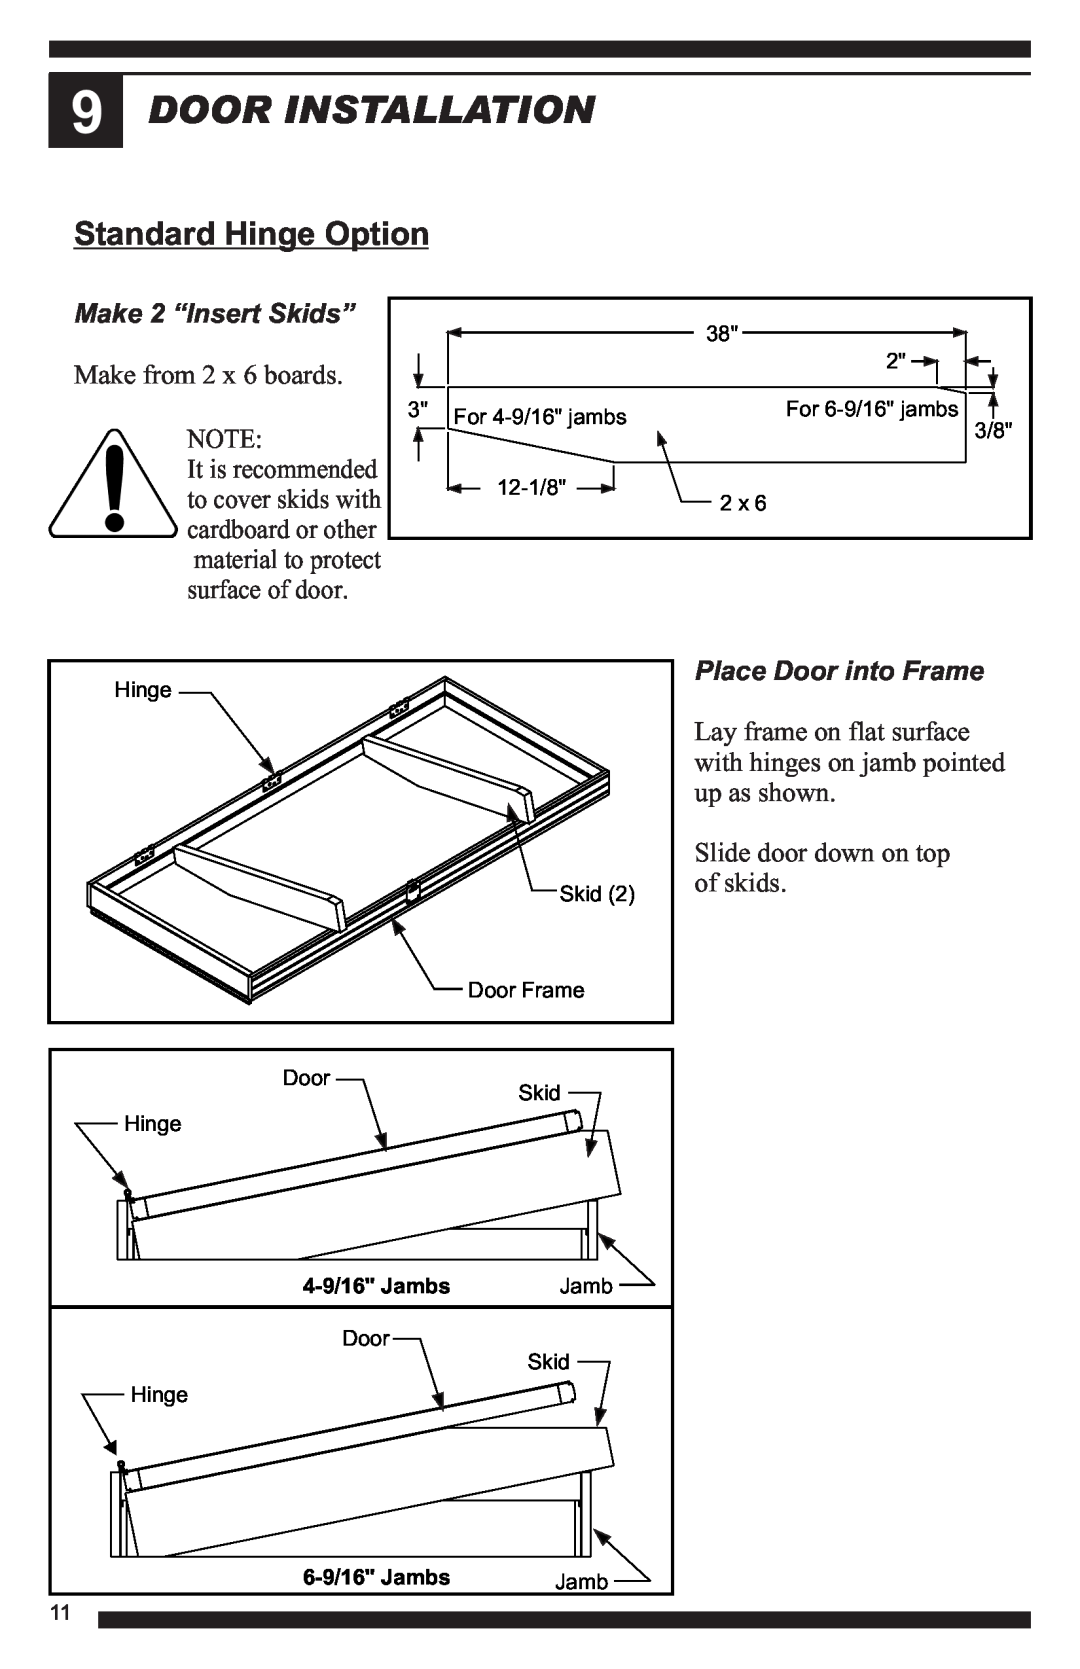 Therma-Tru Hinged Patio Door System Single Panel Assembly Unit manual Door Installation, Standard Hinge Option, 4-9/16Jambs 